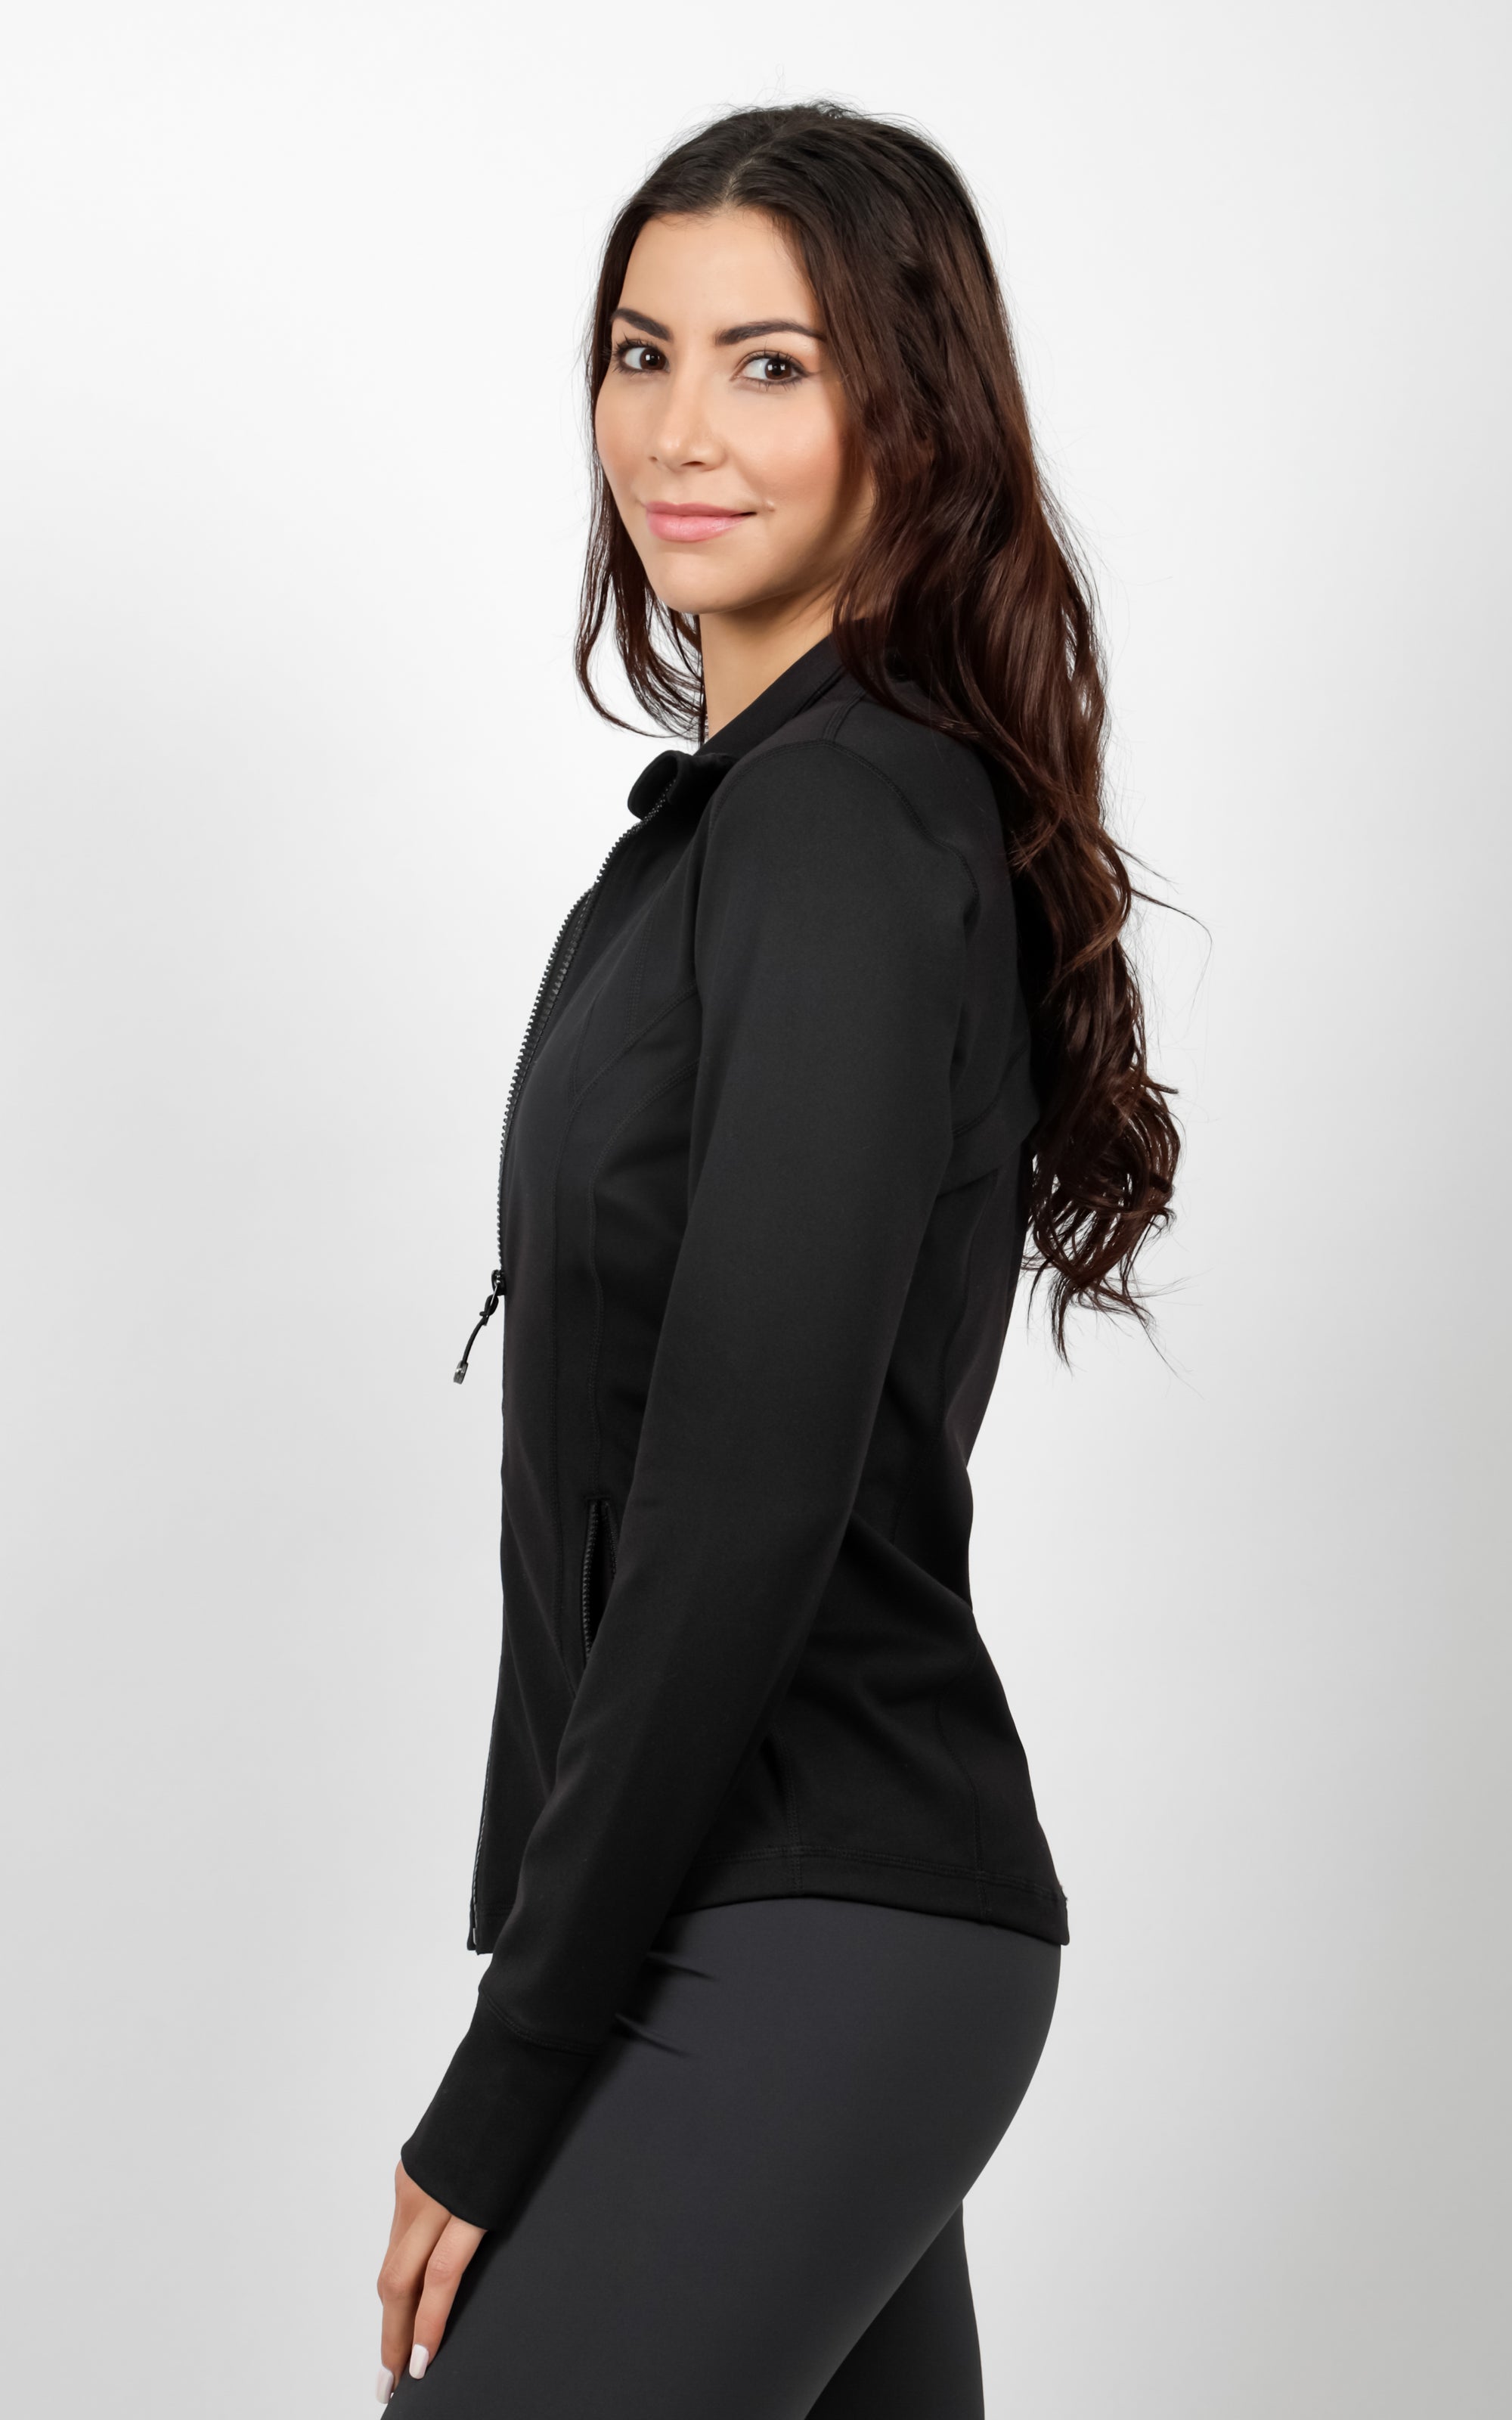 90 Degrees By Reflex White Mesh Panel Full Zip Up Logo Women's Jacket Size  L